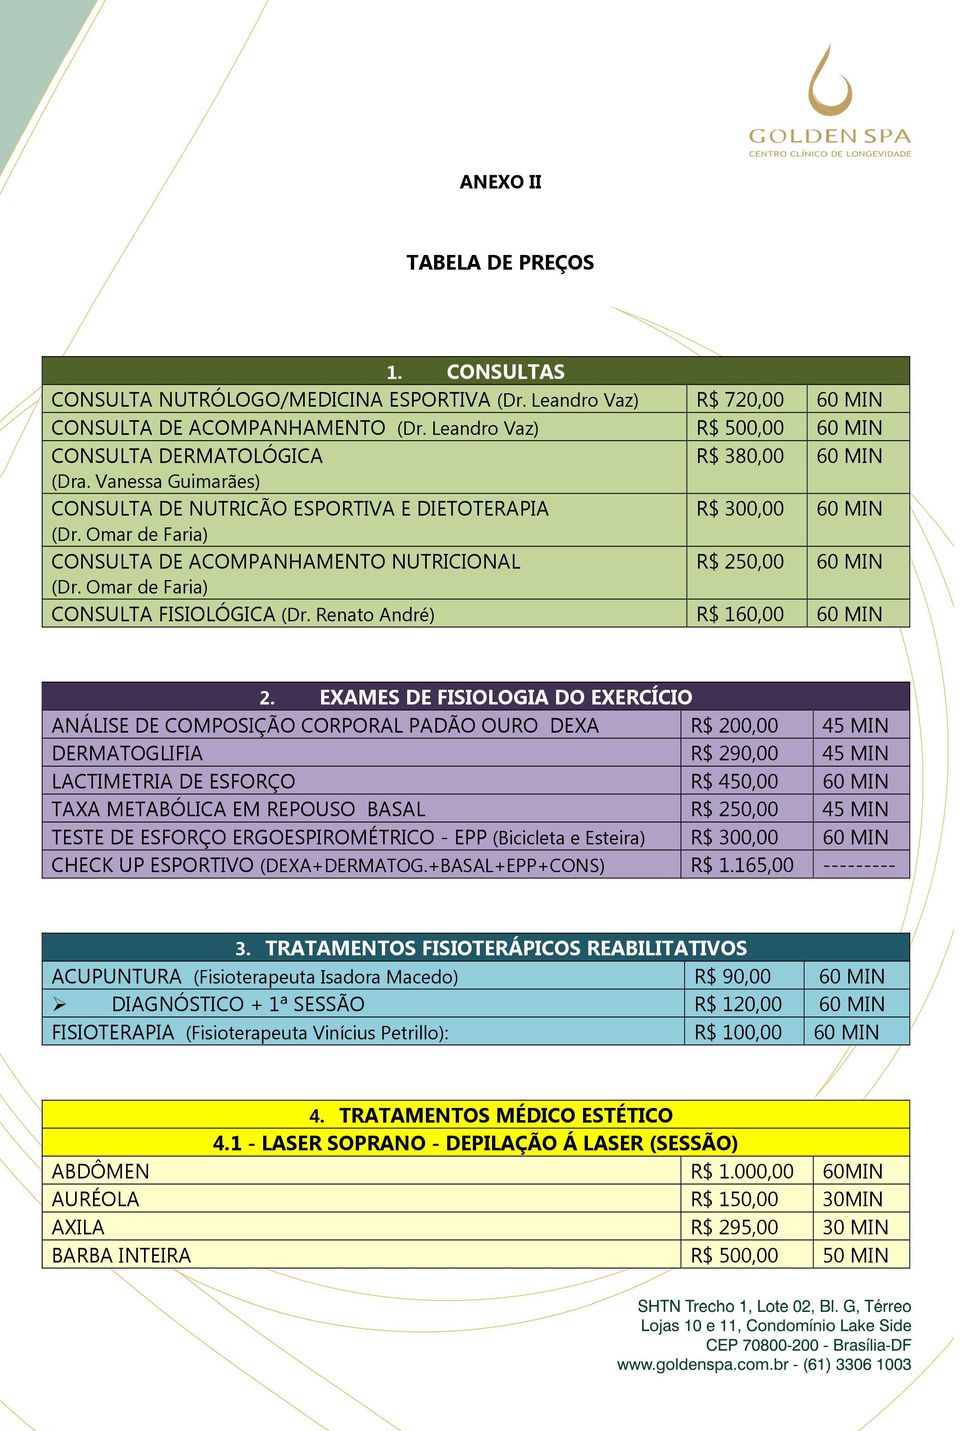 Omar de Faria) CONSULTA DE ACOMPANHAMENTO NUTRICIONAL R$ 250,00 60 MIN (Dr. Omar de Faria) CONSULTA FISIOLÓGICA (Dr. Renato André) R$ 160,00 60 MIN 2.